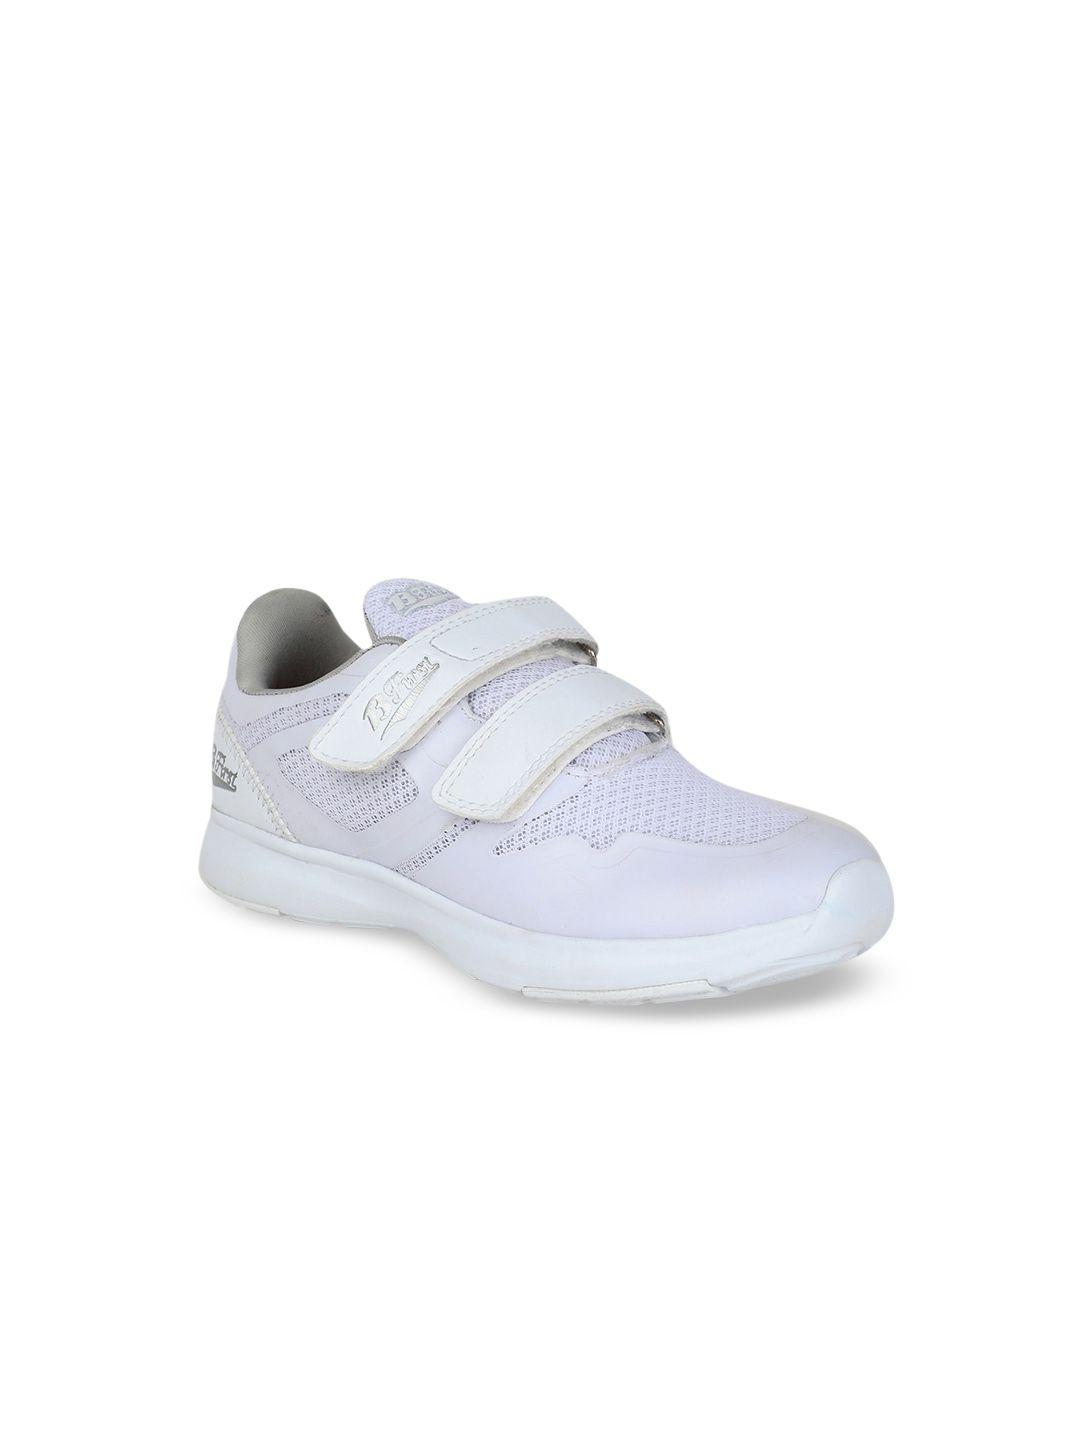 bata unisex kids white sneakers